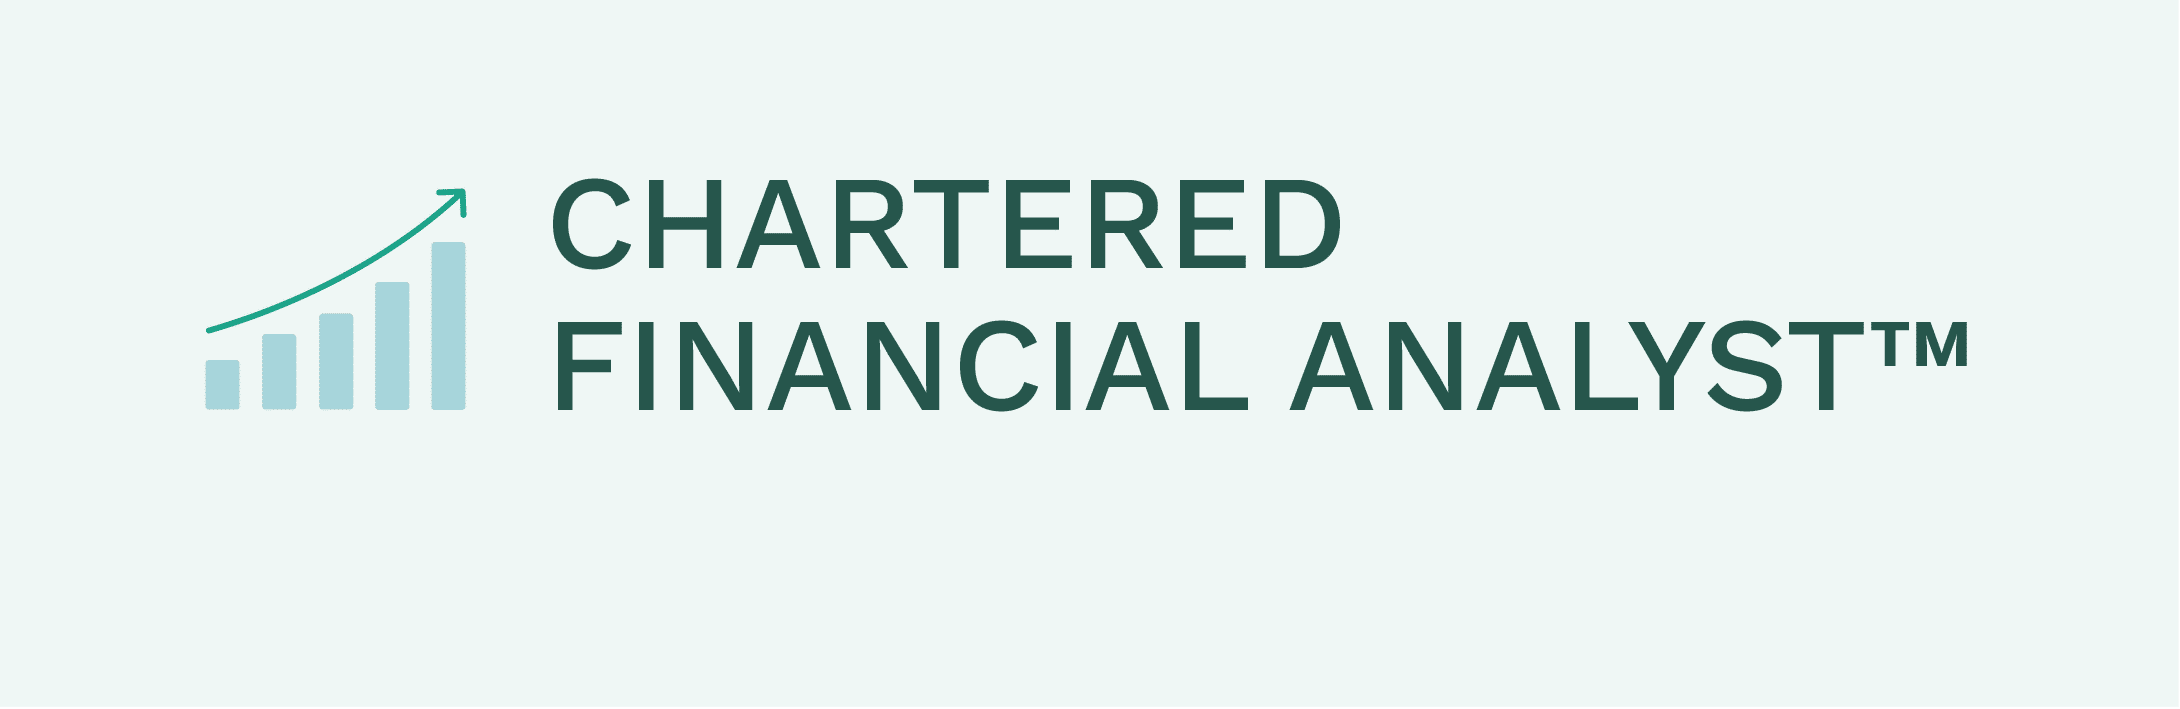 Certified Financial Planner